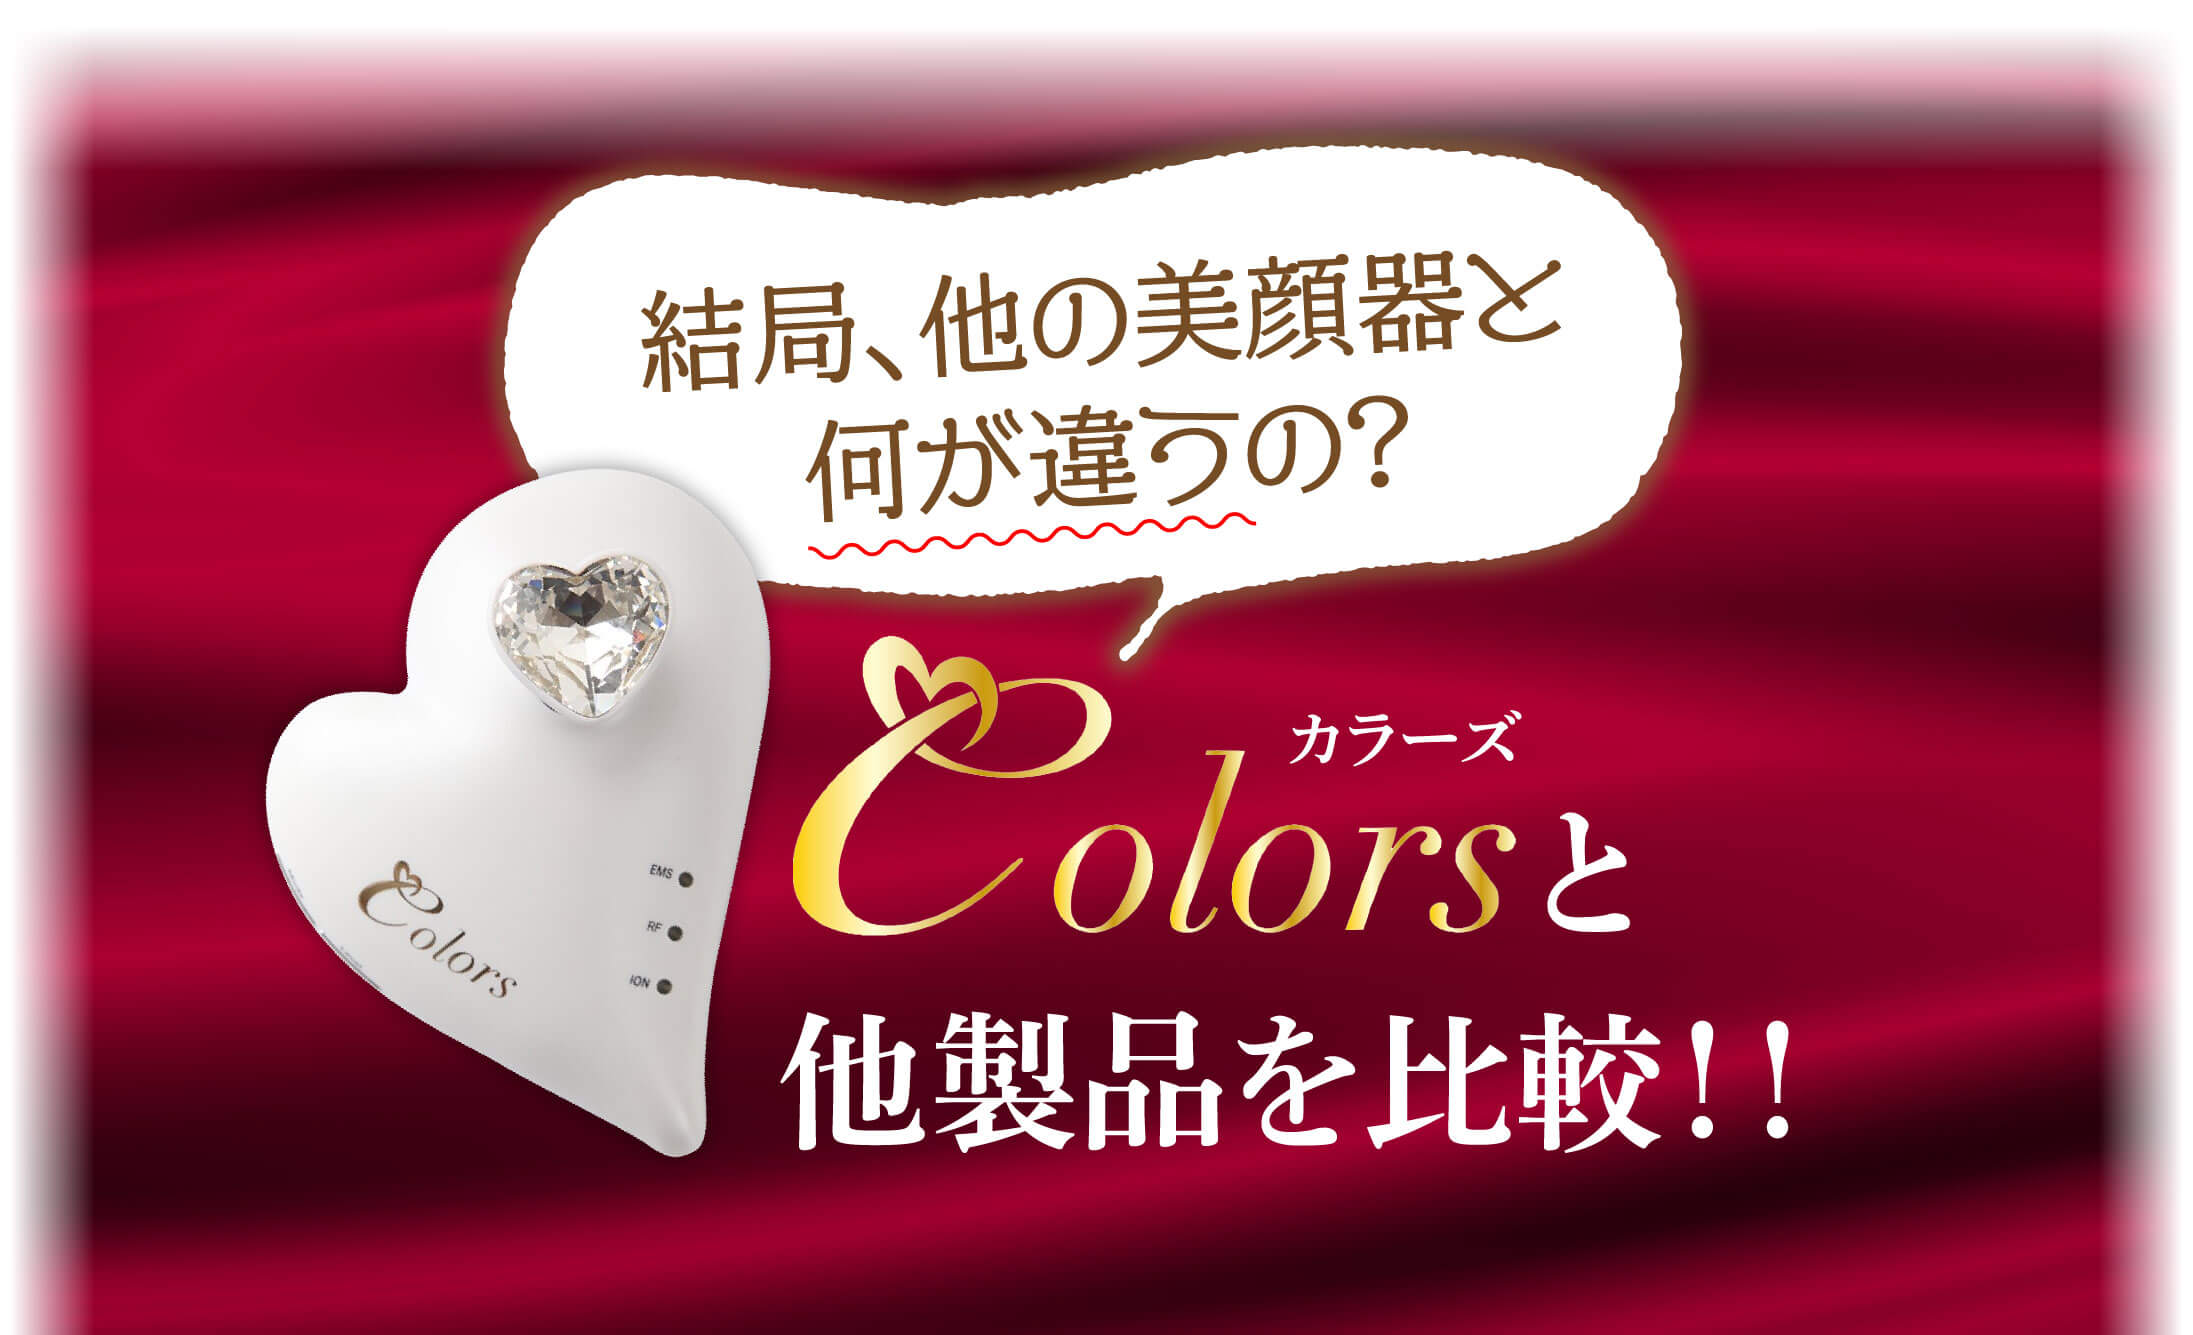 colors美顔器 - 通販 - csa.sakura.ne.jp